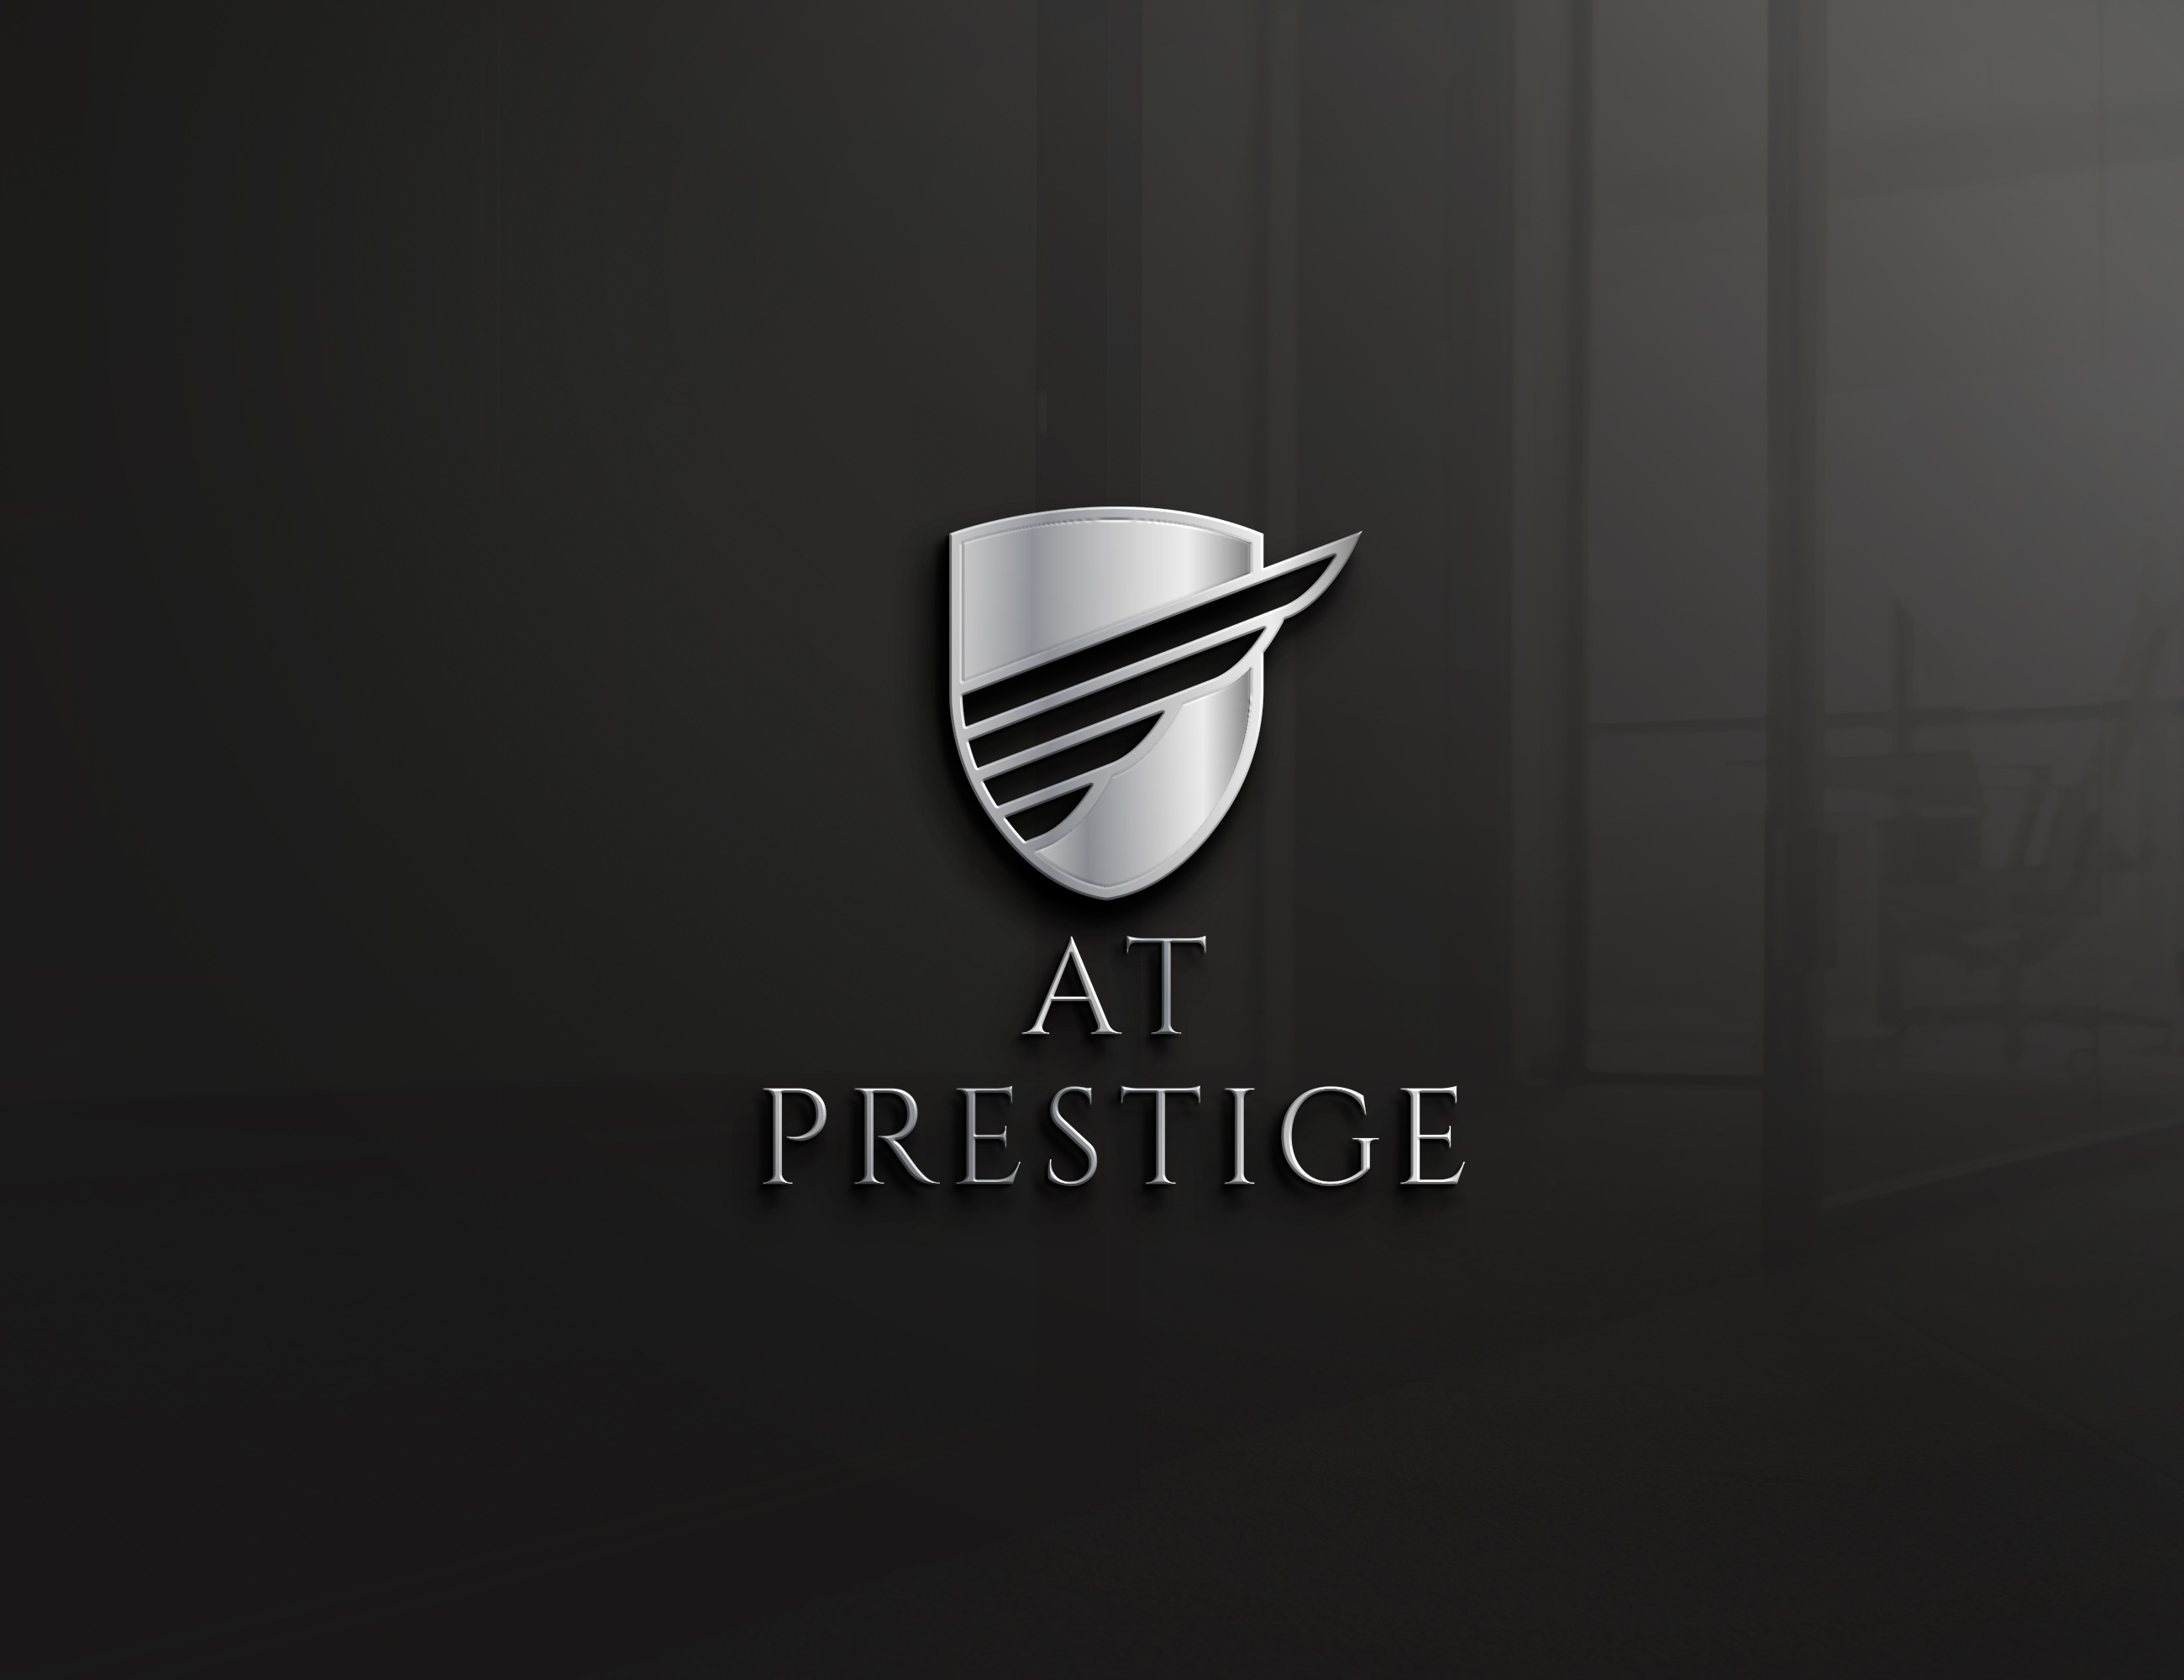 Concessionnaire At Prestige - Nantes